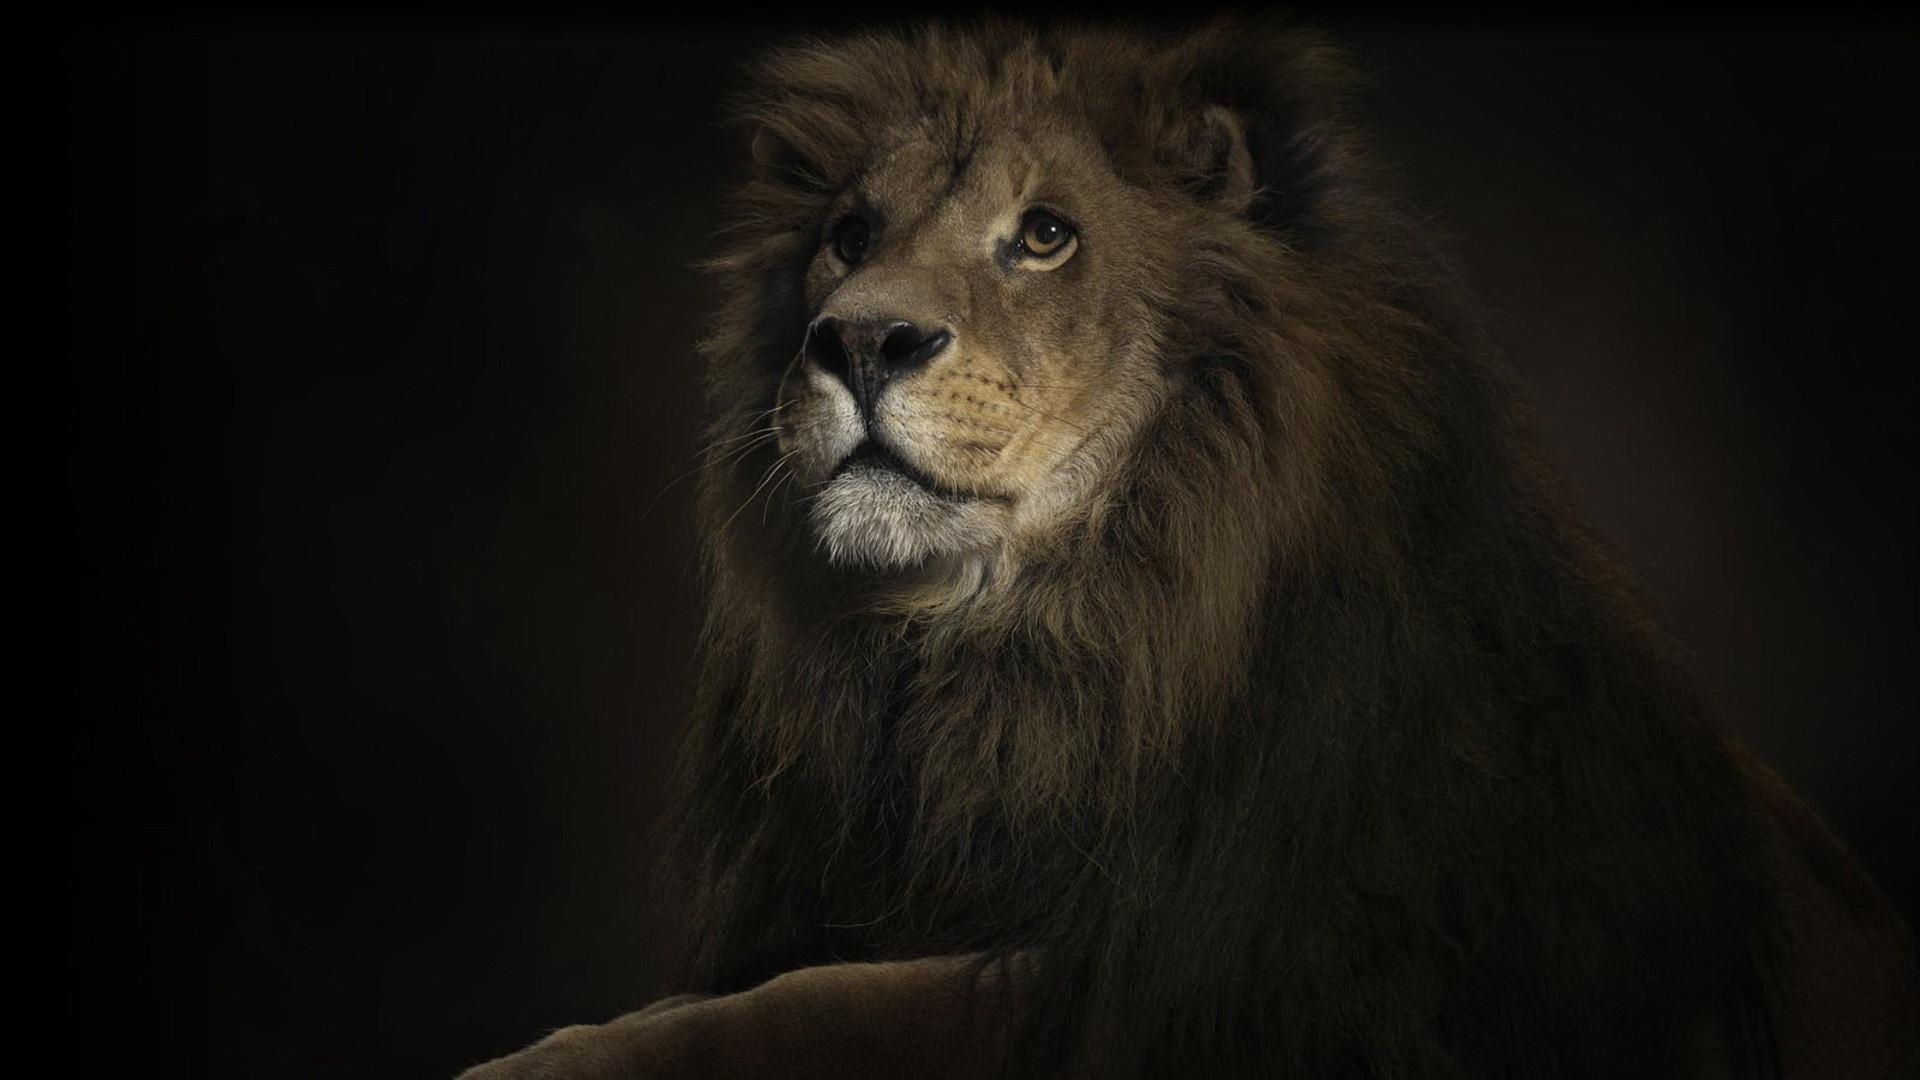 A handsome lion.